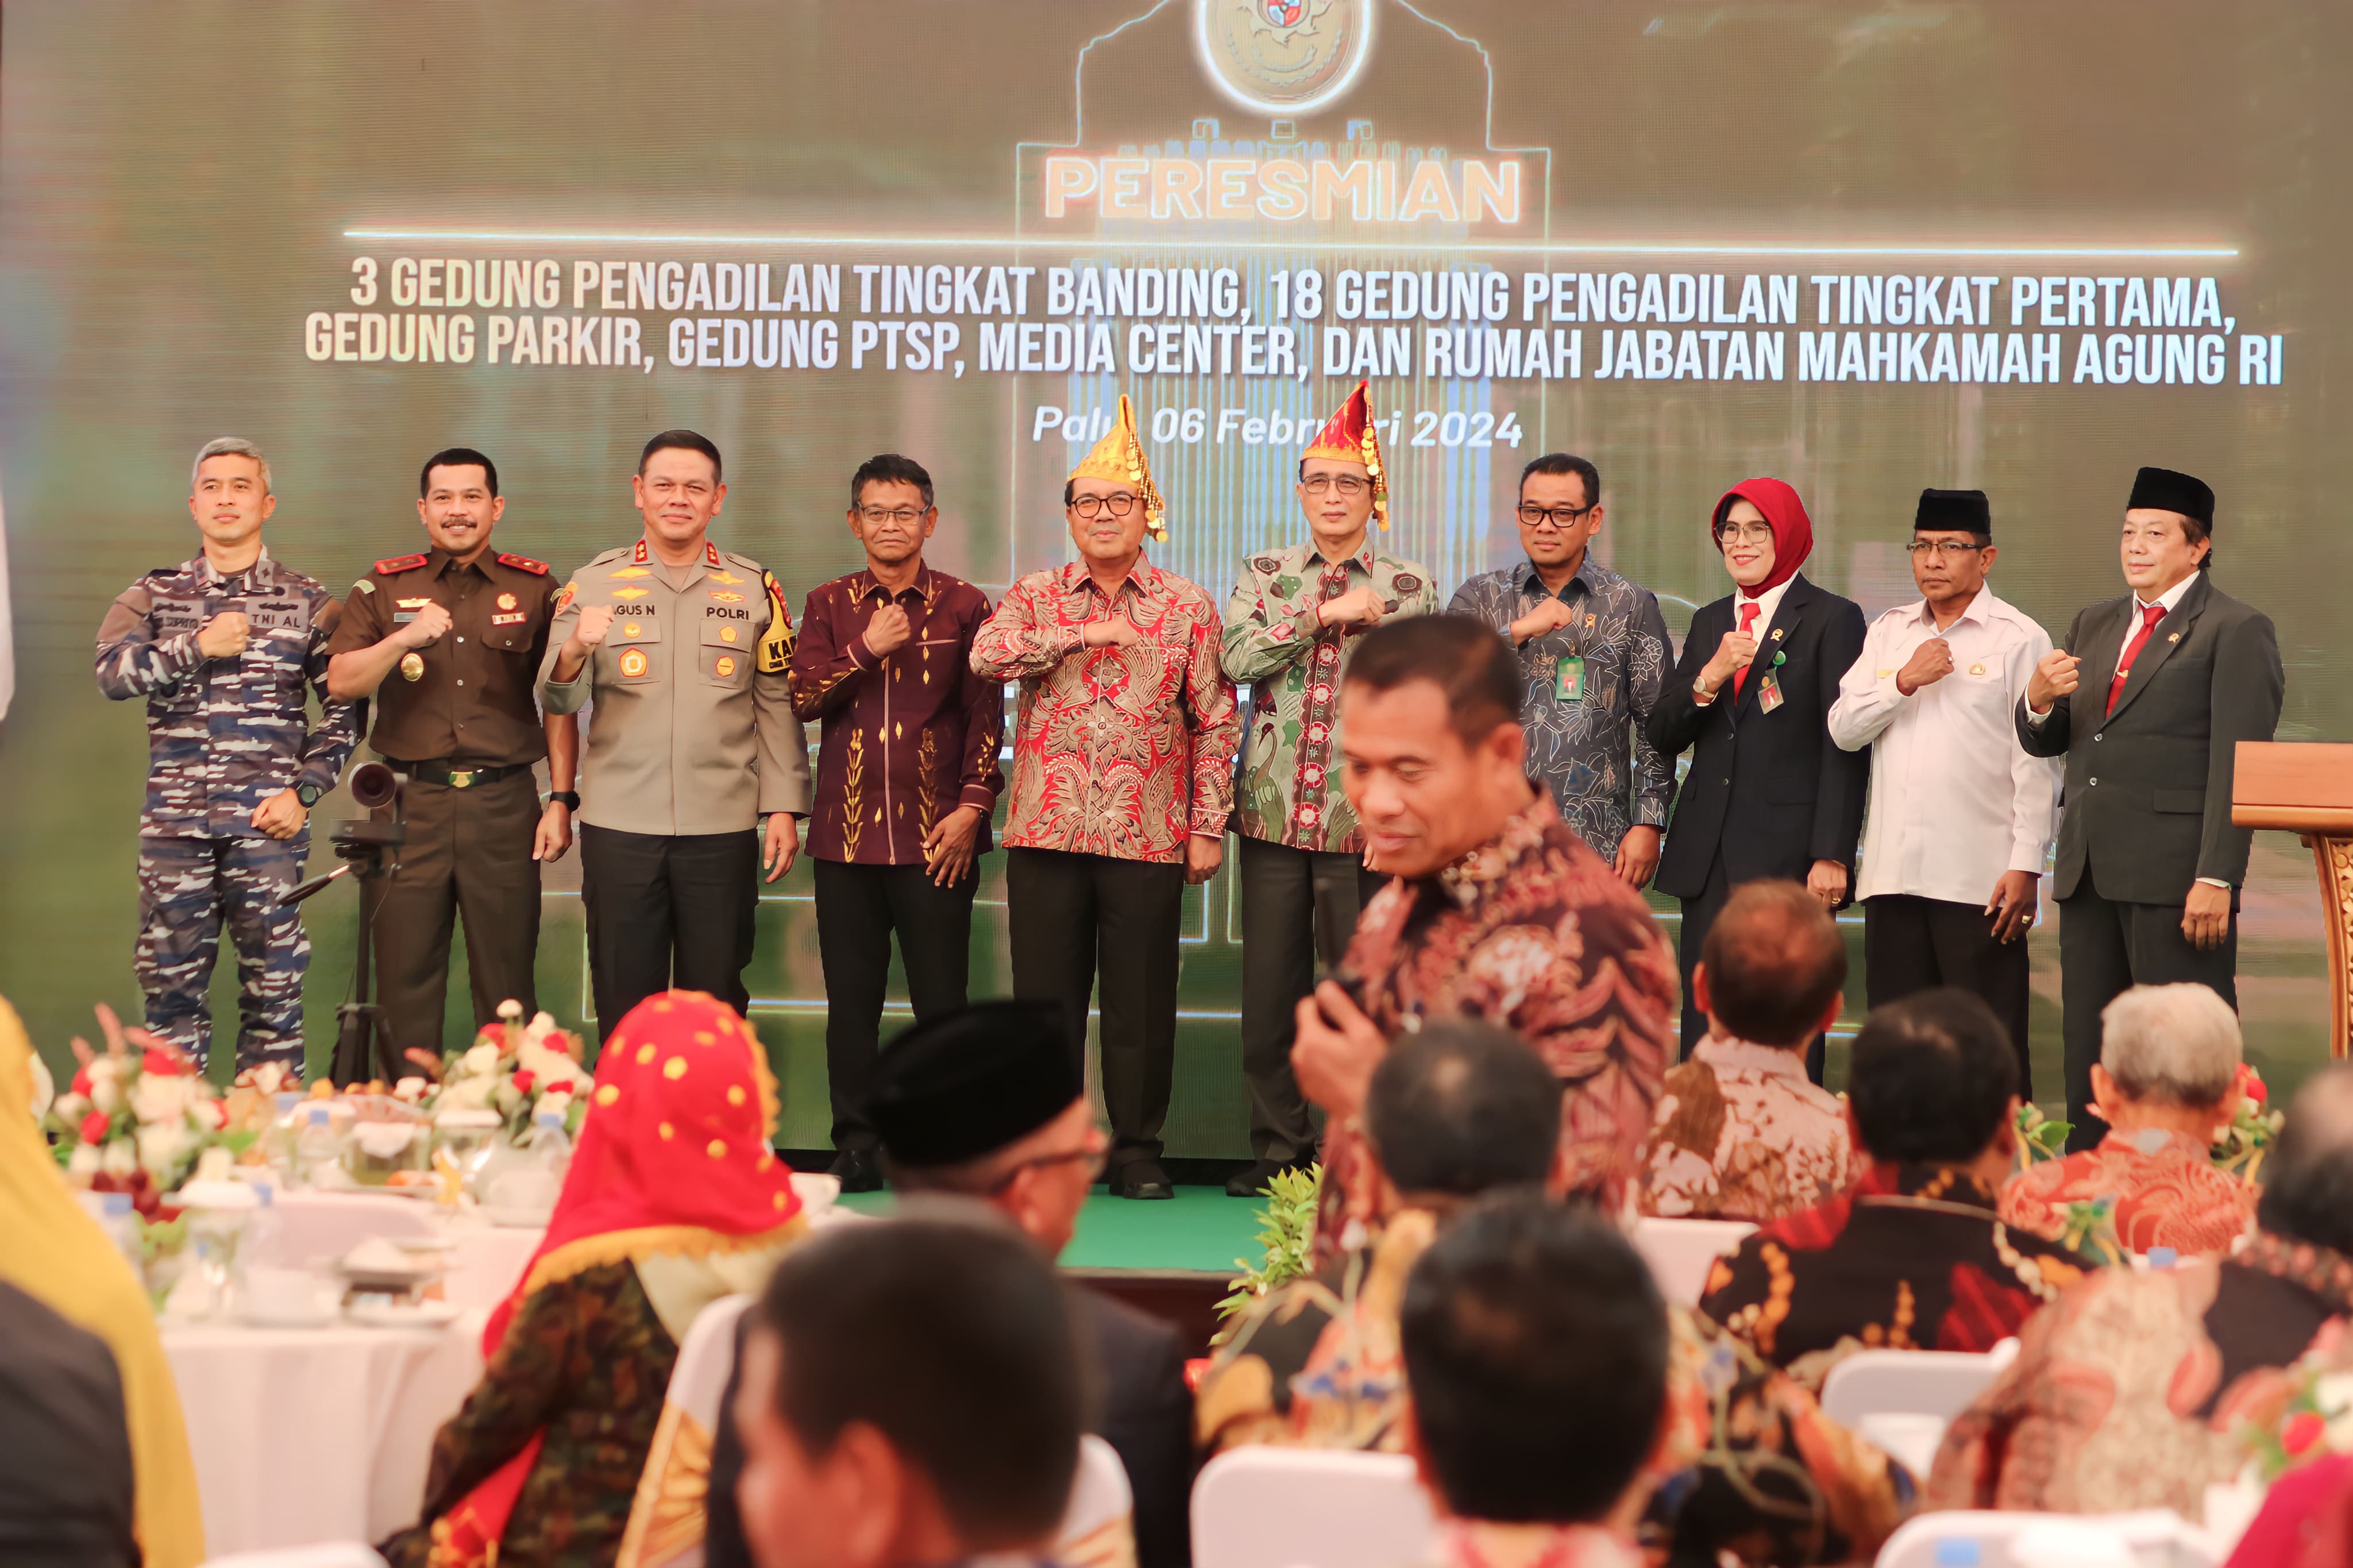 KAJATI SULTENG MENGHADIRI PERESMIAN 3 GEDUNG PENGADILAN BERSAMA KETUA MAHKAMAH AGUNG REPUBLIK INDONESIA